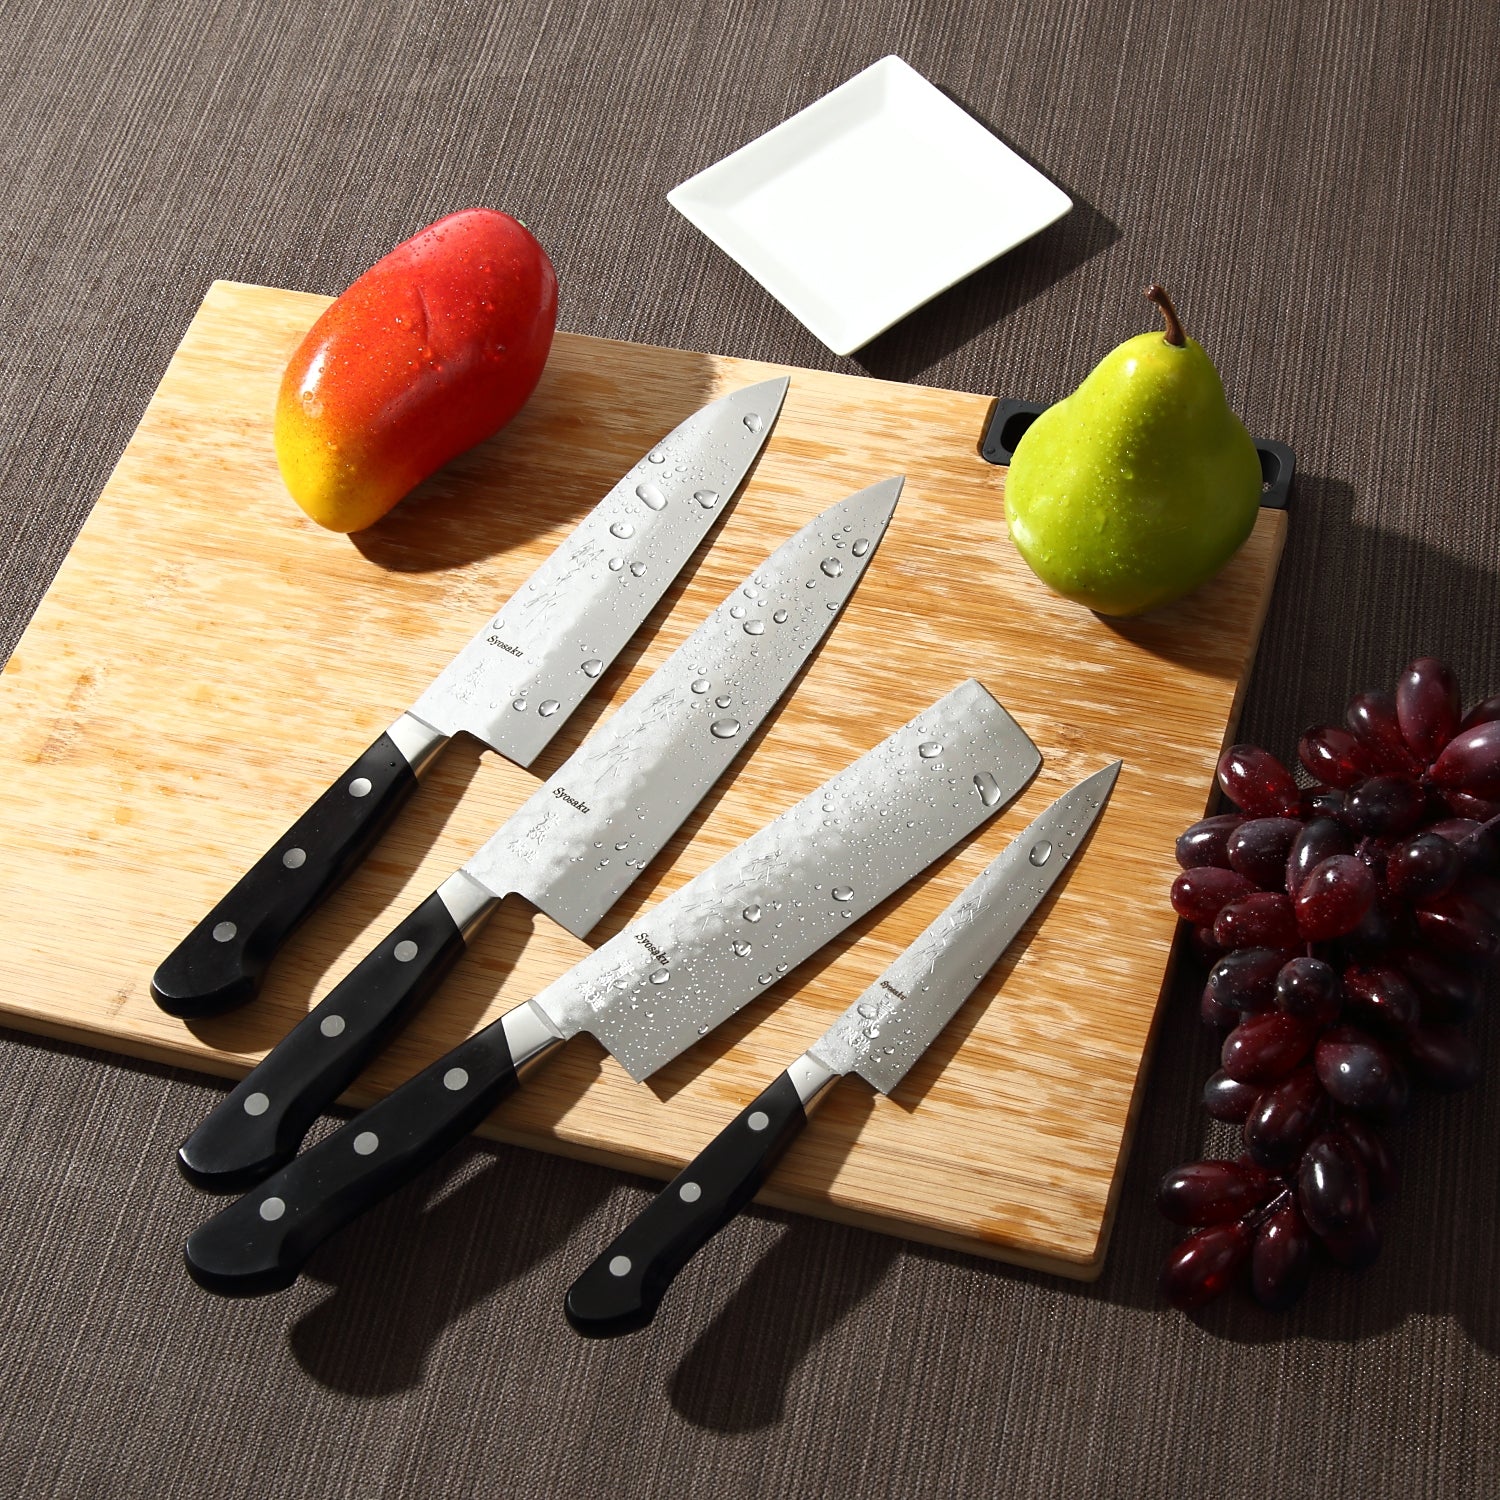 Syosaku Japanese Best Sharp Kitchen Chef Knife Aoko(Blue Steel)-No.2 Black Pakkawood Handle, Gyuto 8-inch (200mm) with Magnolia Wood Sheath Saya Cover